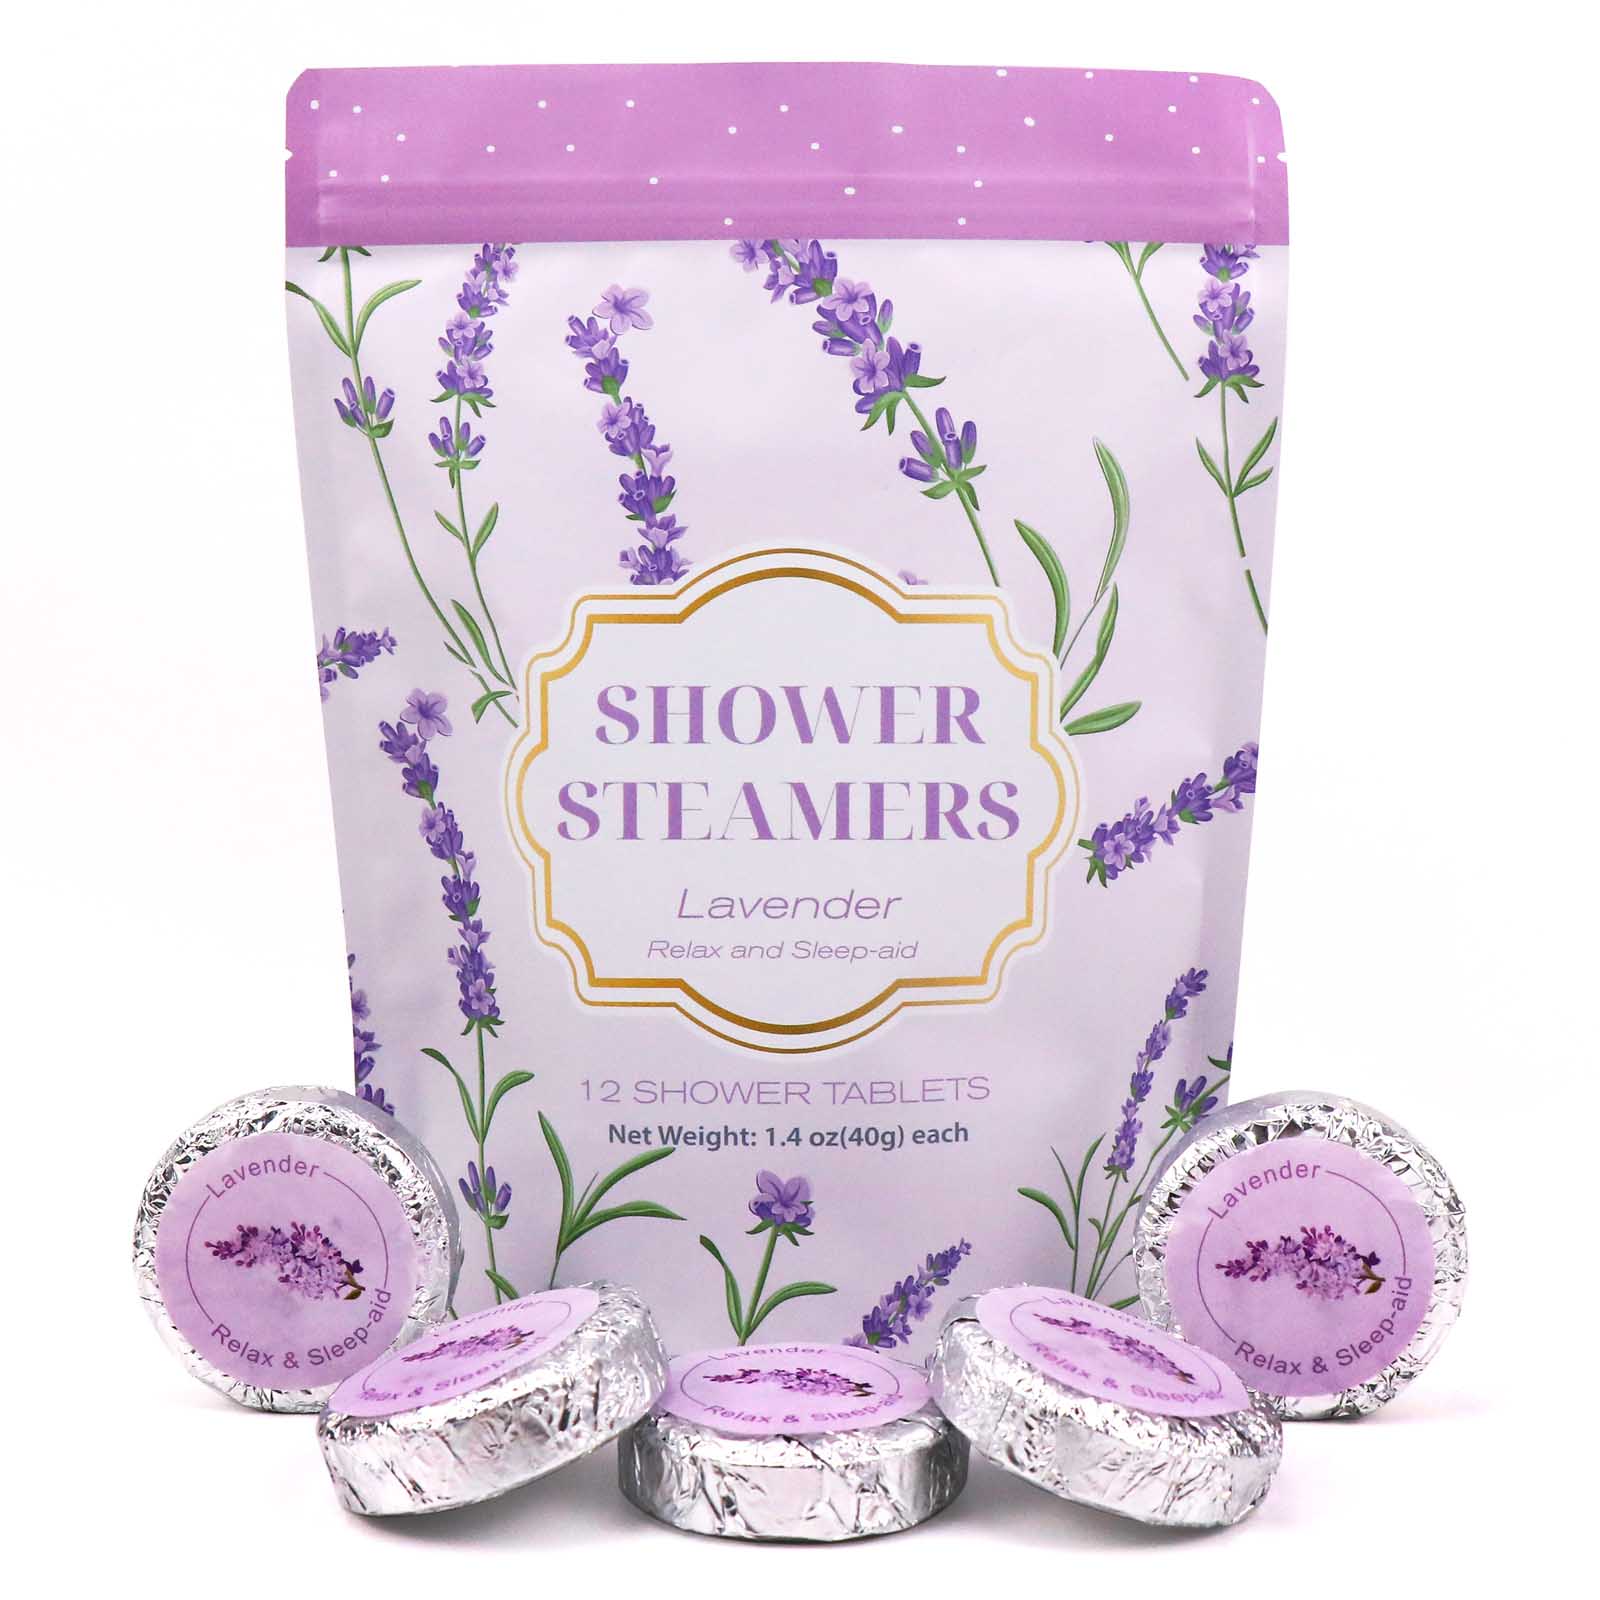 Lavender Steamer